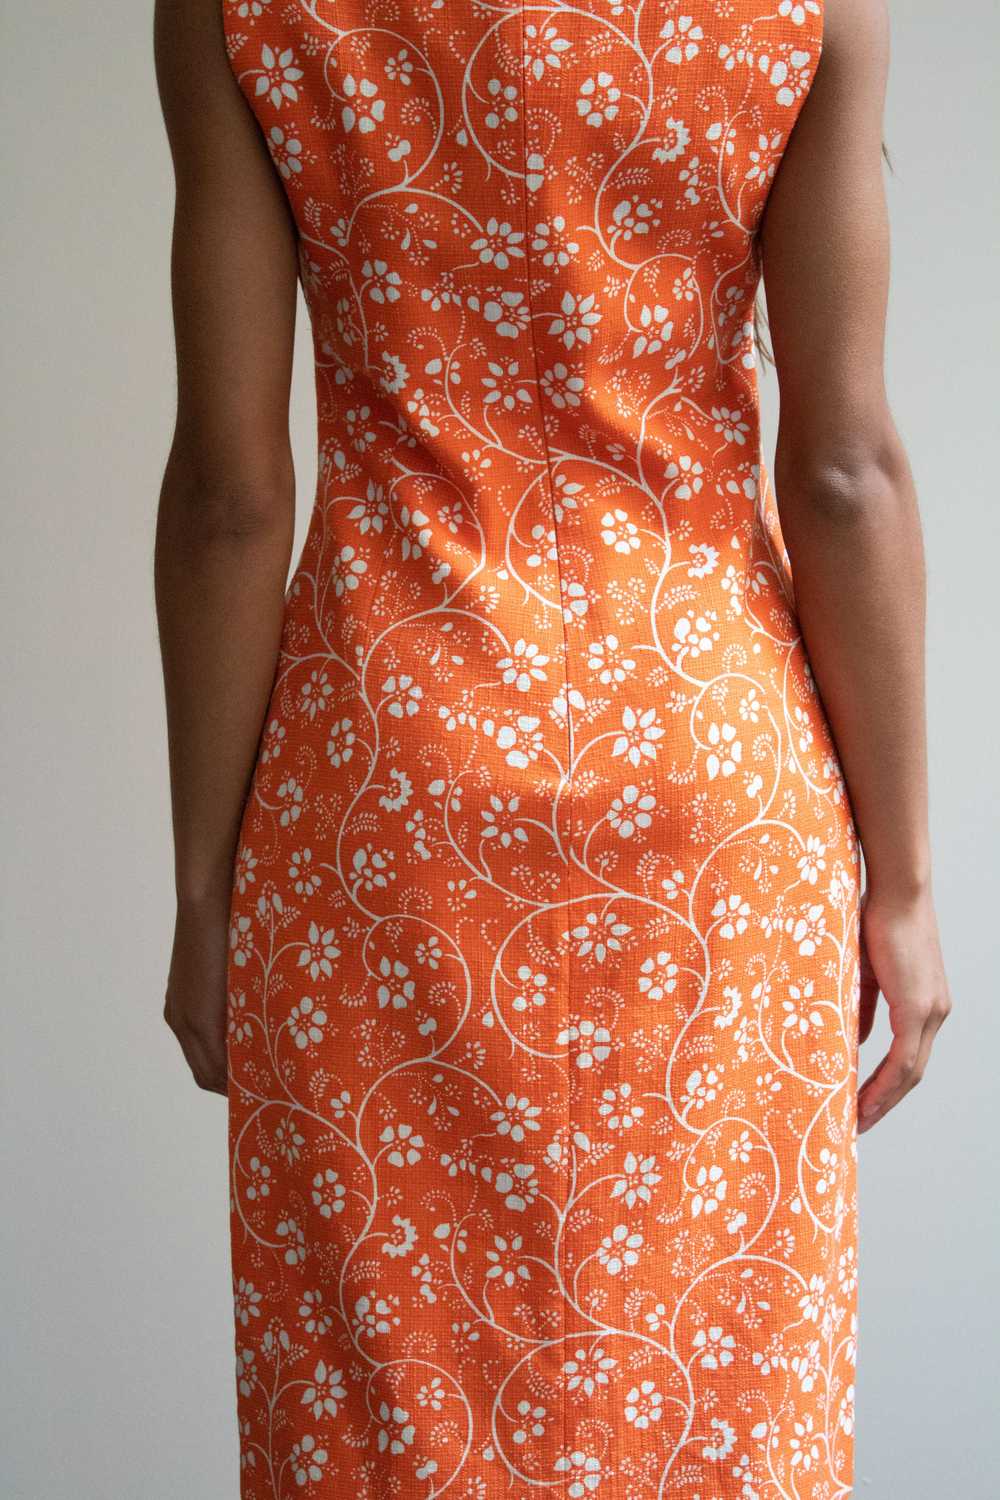 Gianni Versace Orange Cotton blend dress - image 5